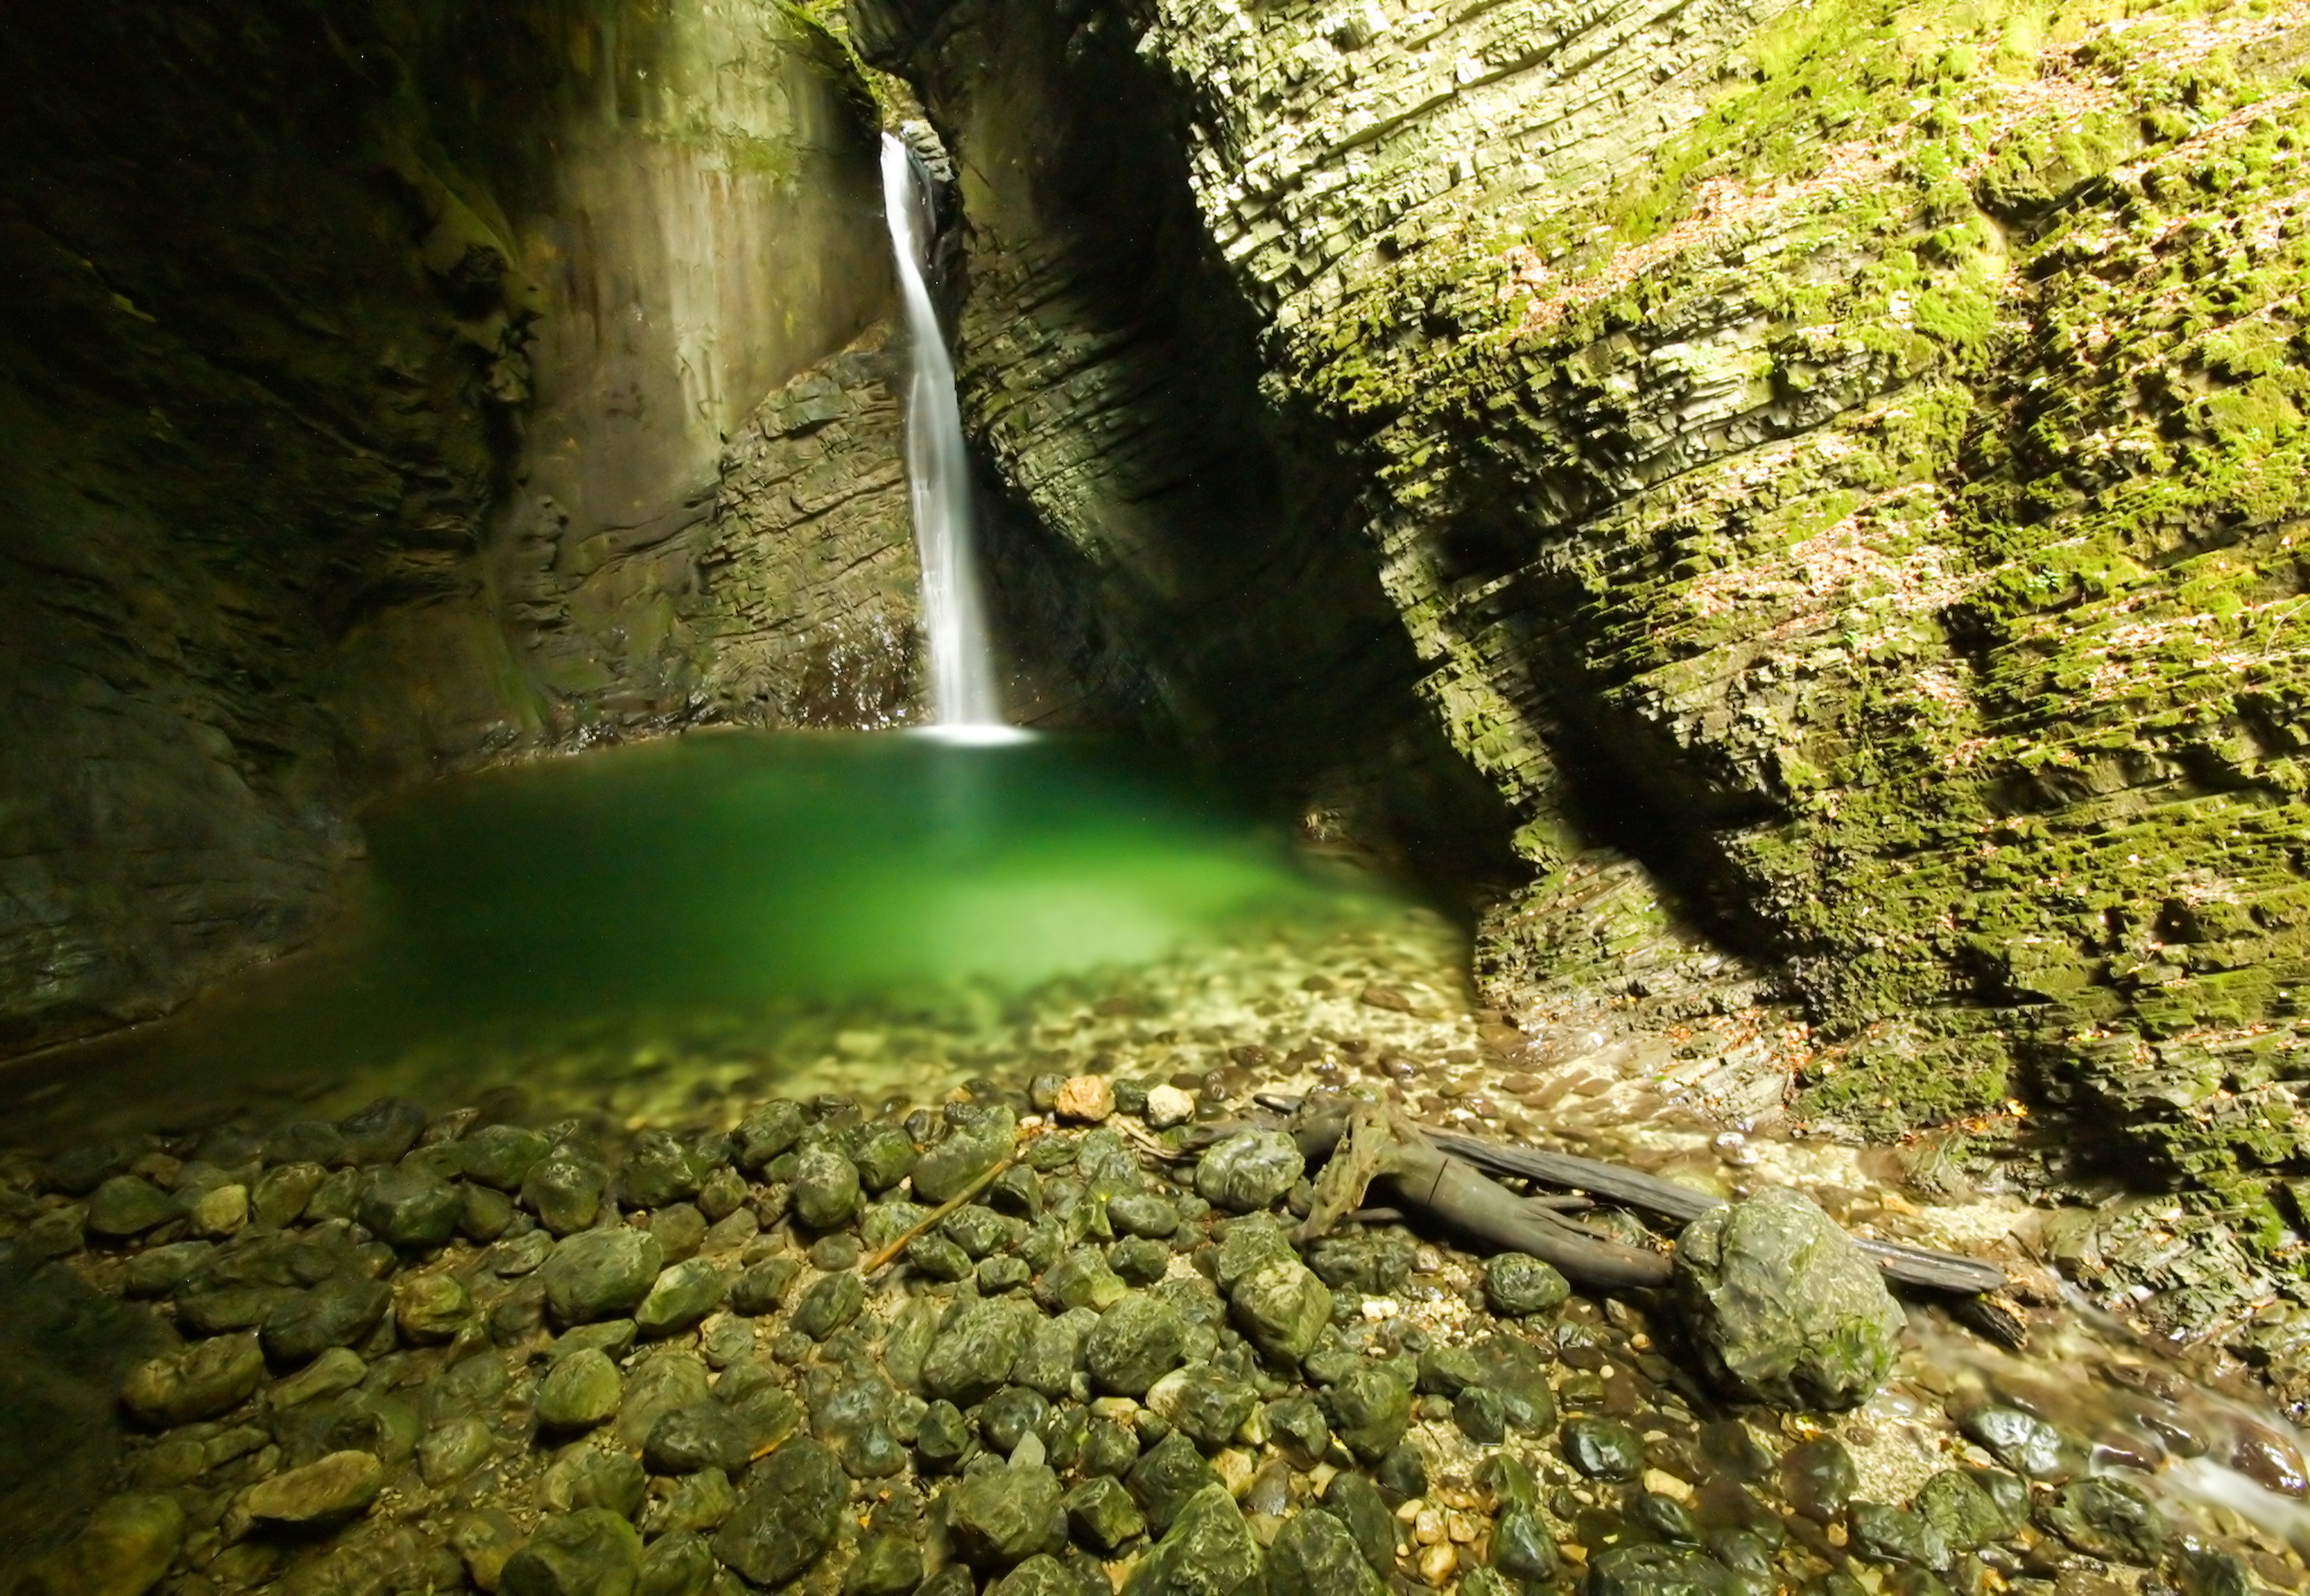 Postojna Caves, an example of Slovenia's stunning natural beauty